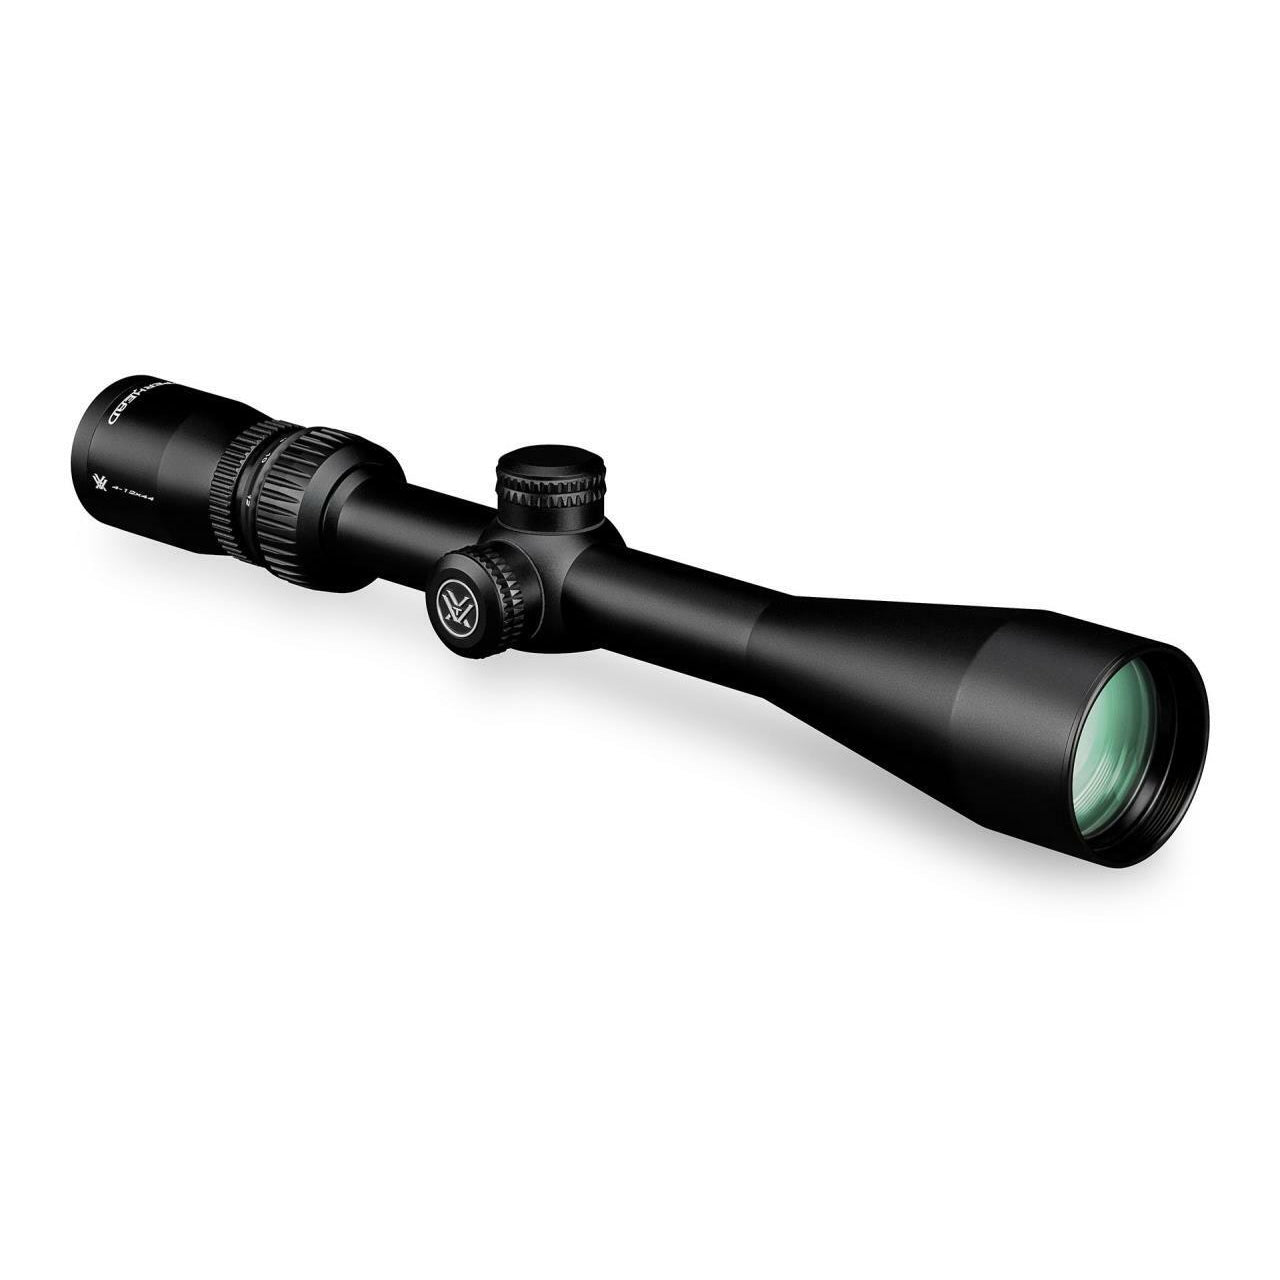 Vortex Copperhead Riflescope-OPTICS-Kevin's Fine Outdoor Gear & Apparel